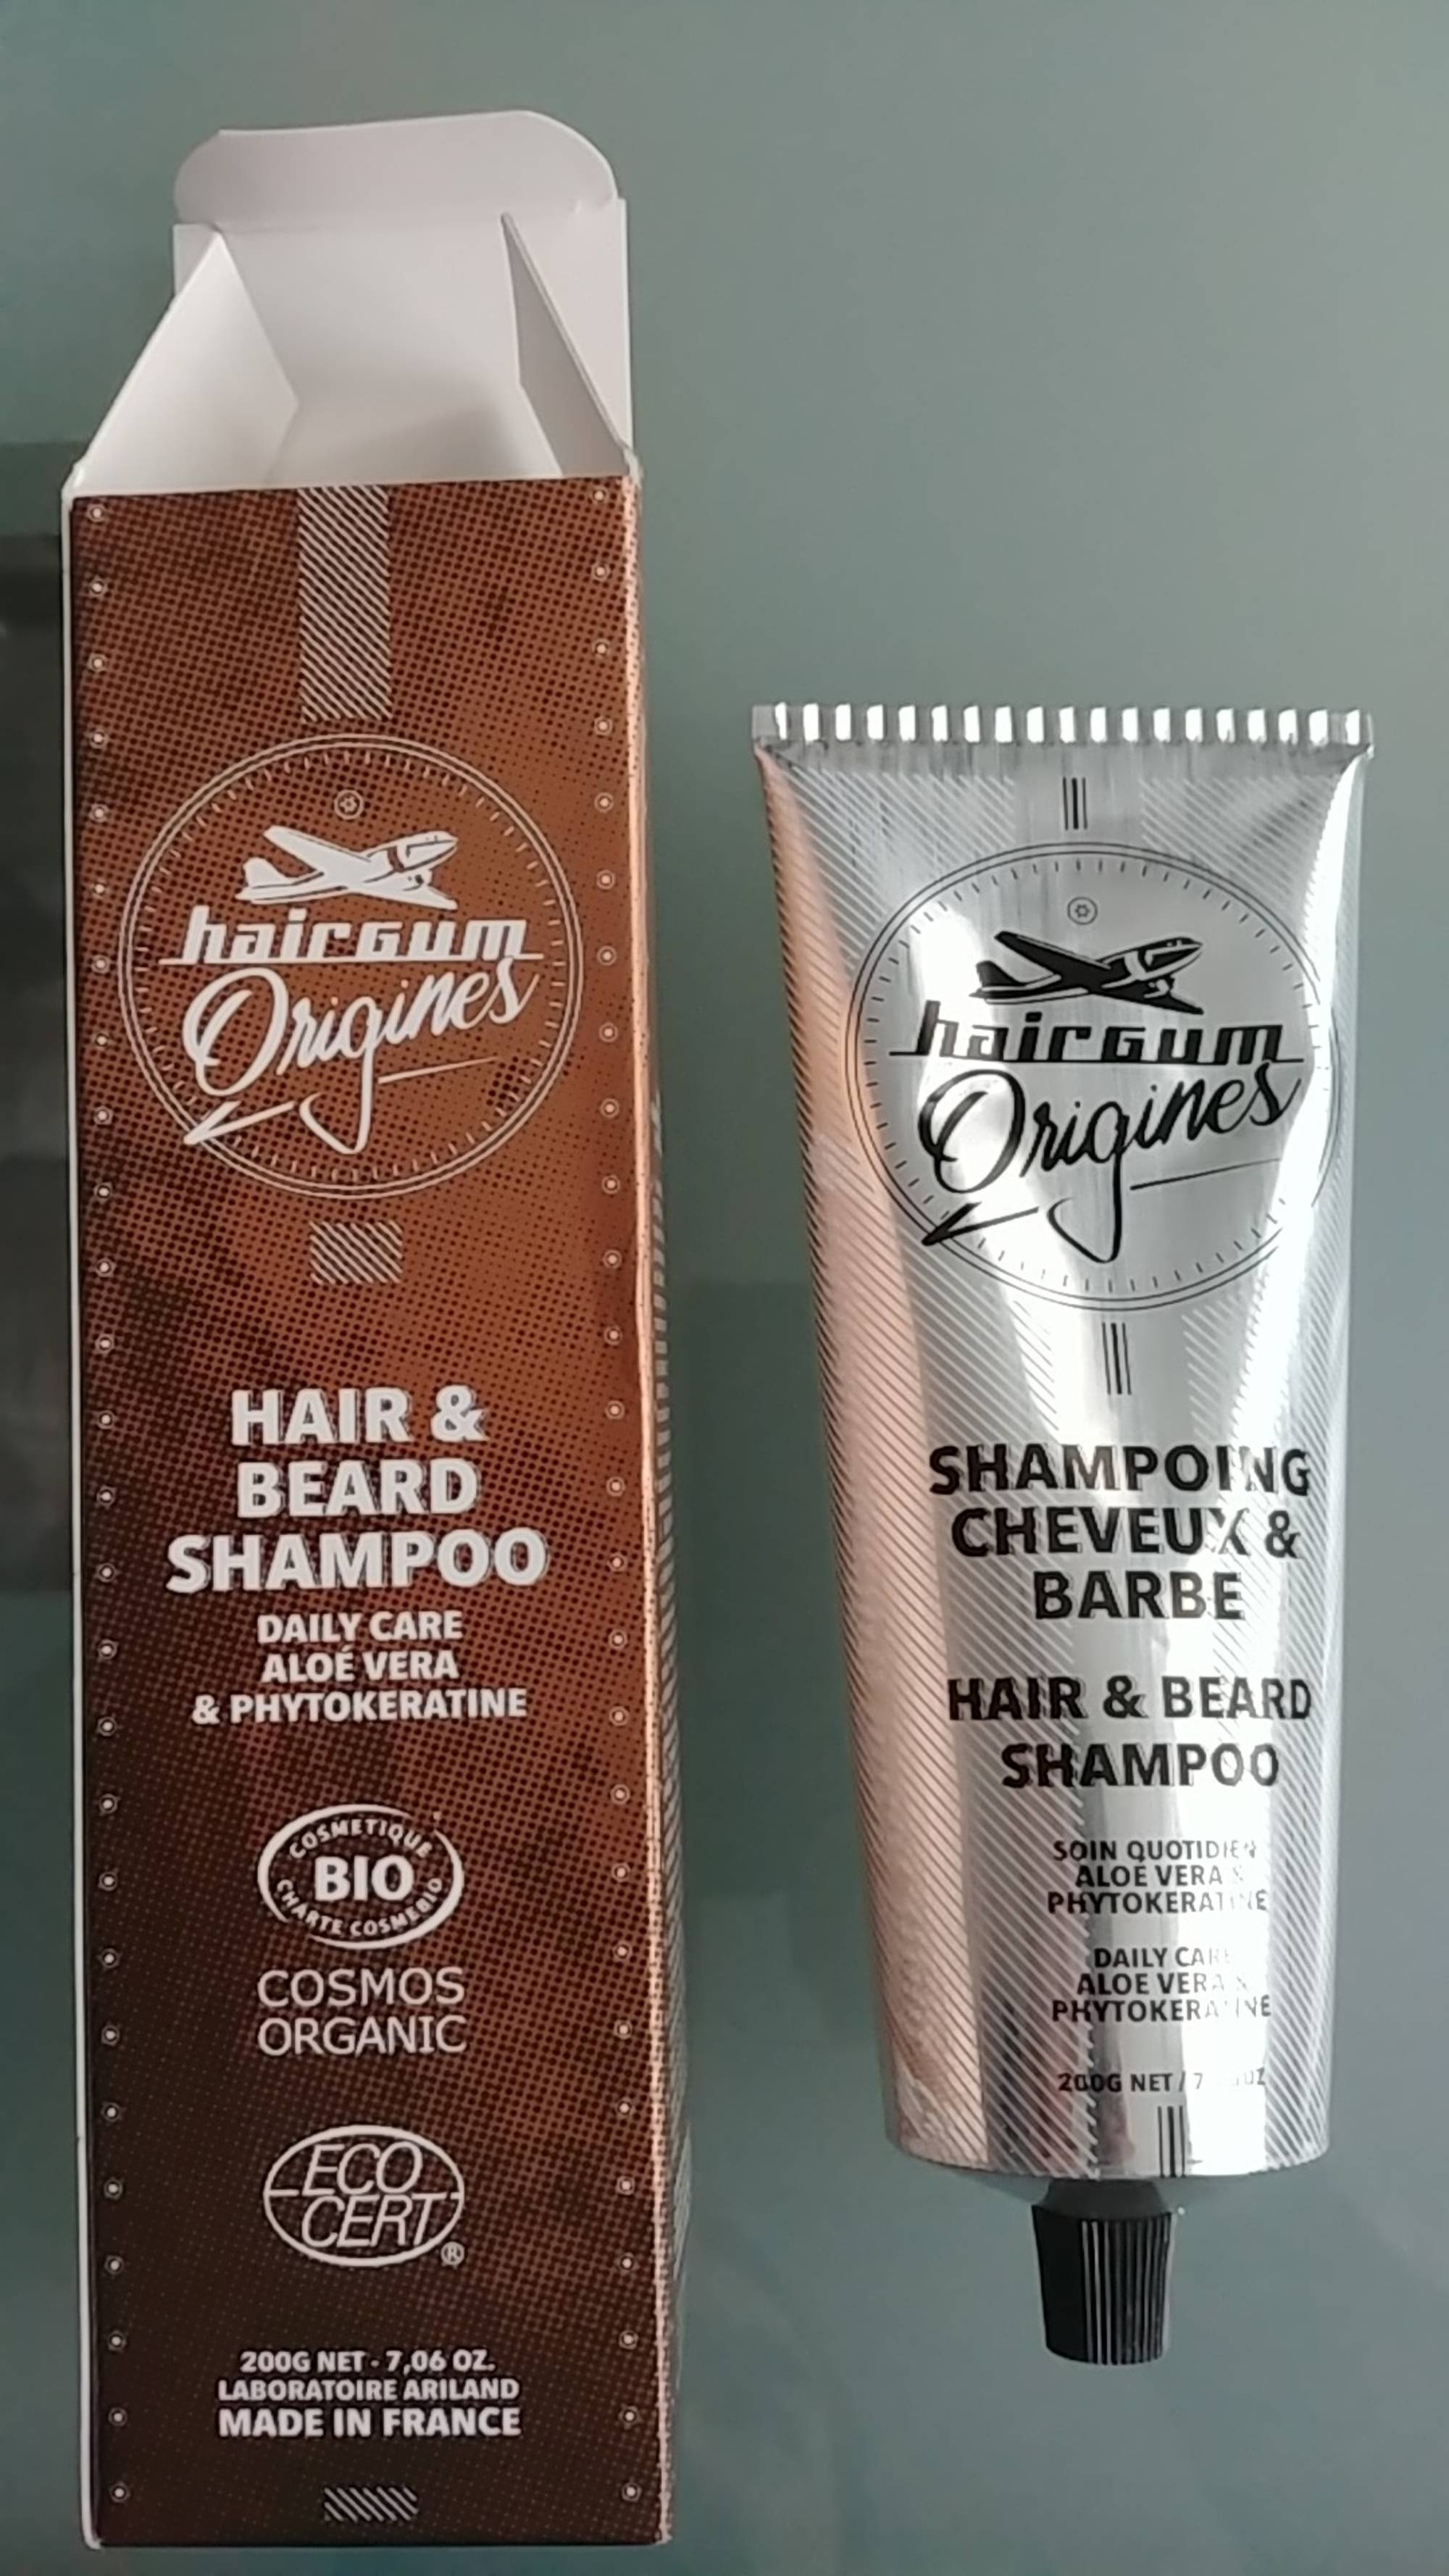 HAIRGUM - Shampooing cheveux & barbe